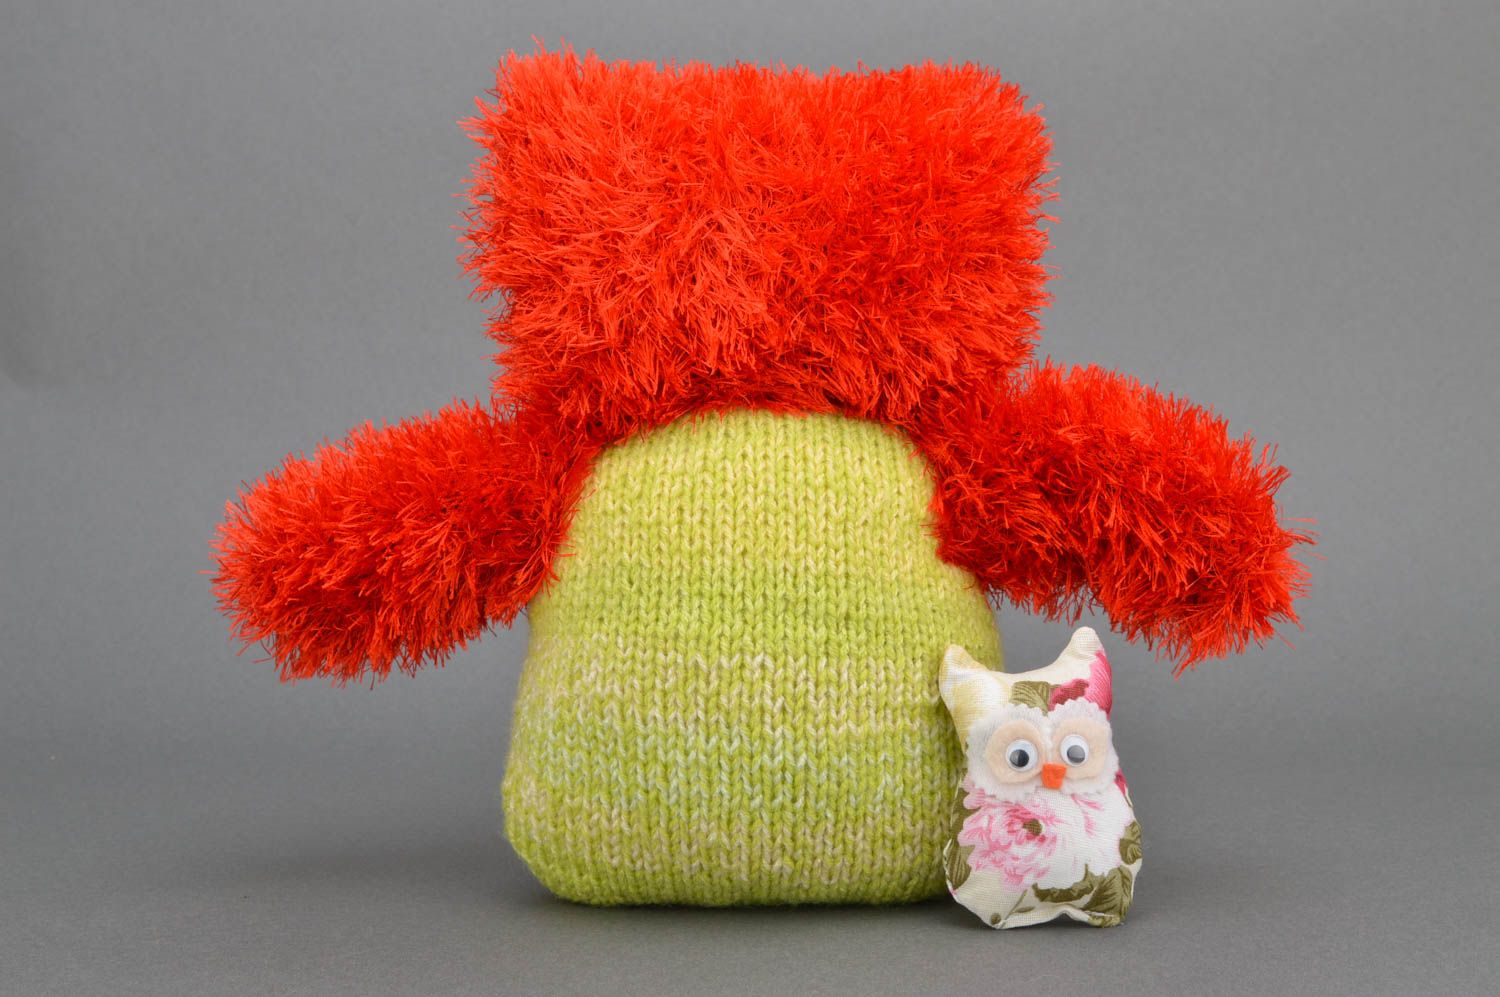 Handmade stuffed owl toy decorative soft toy gift for baby nursery decor ideas photo 3